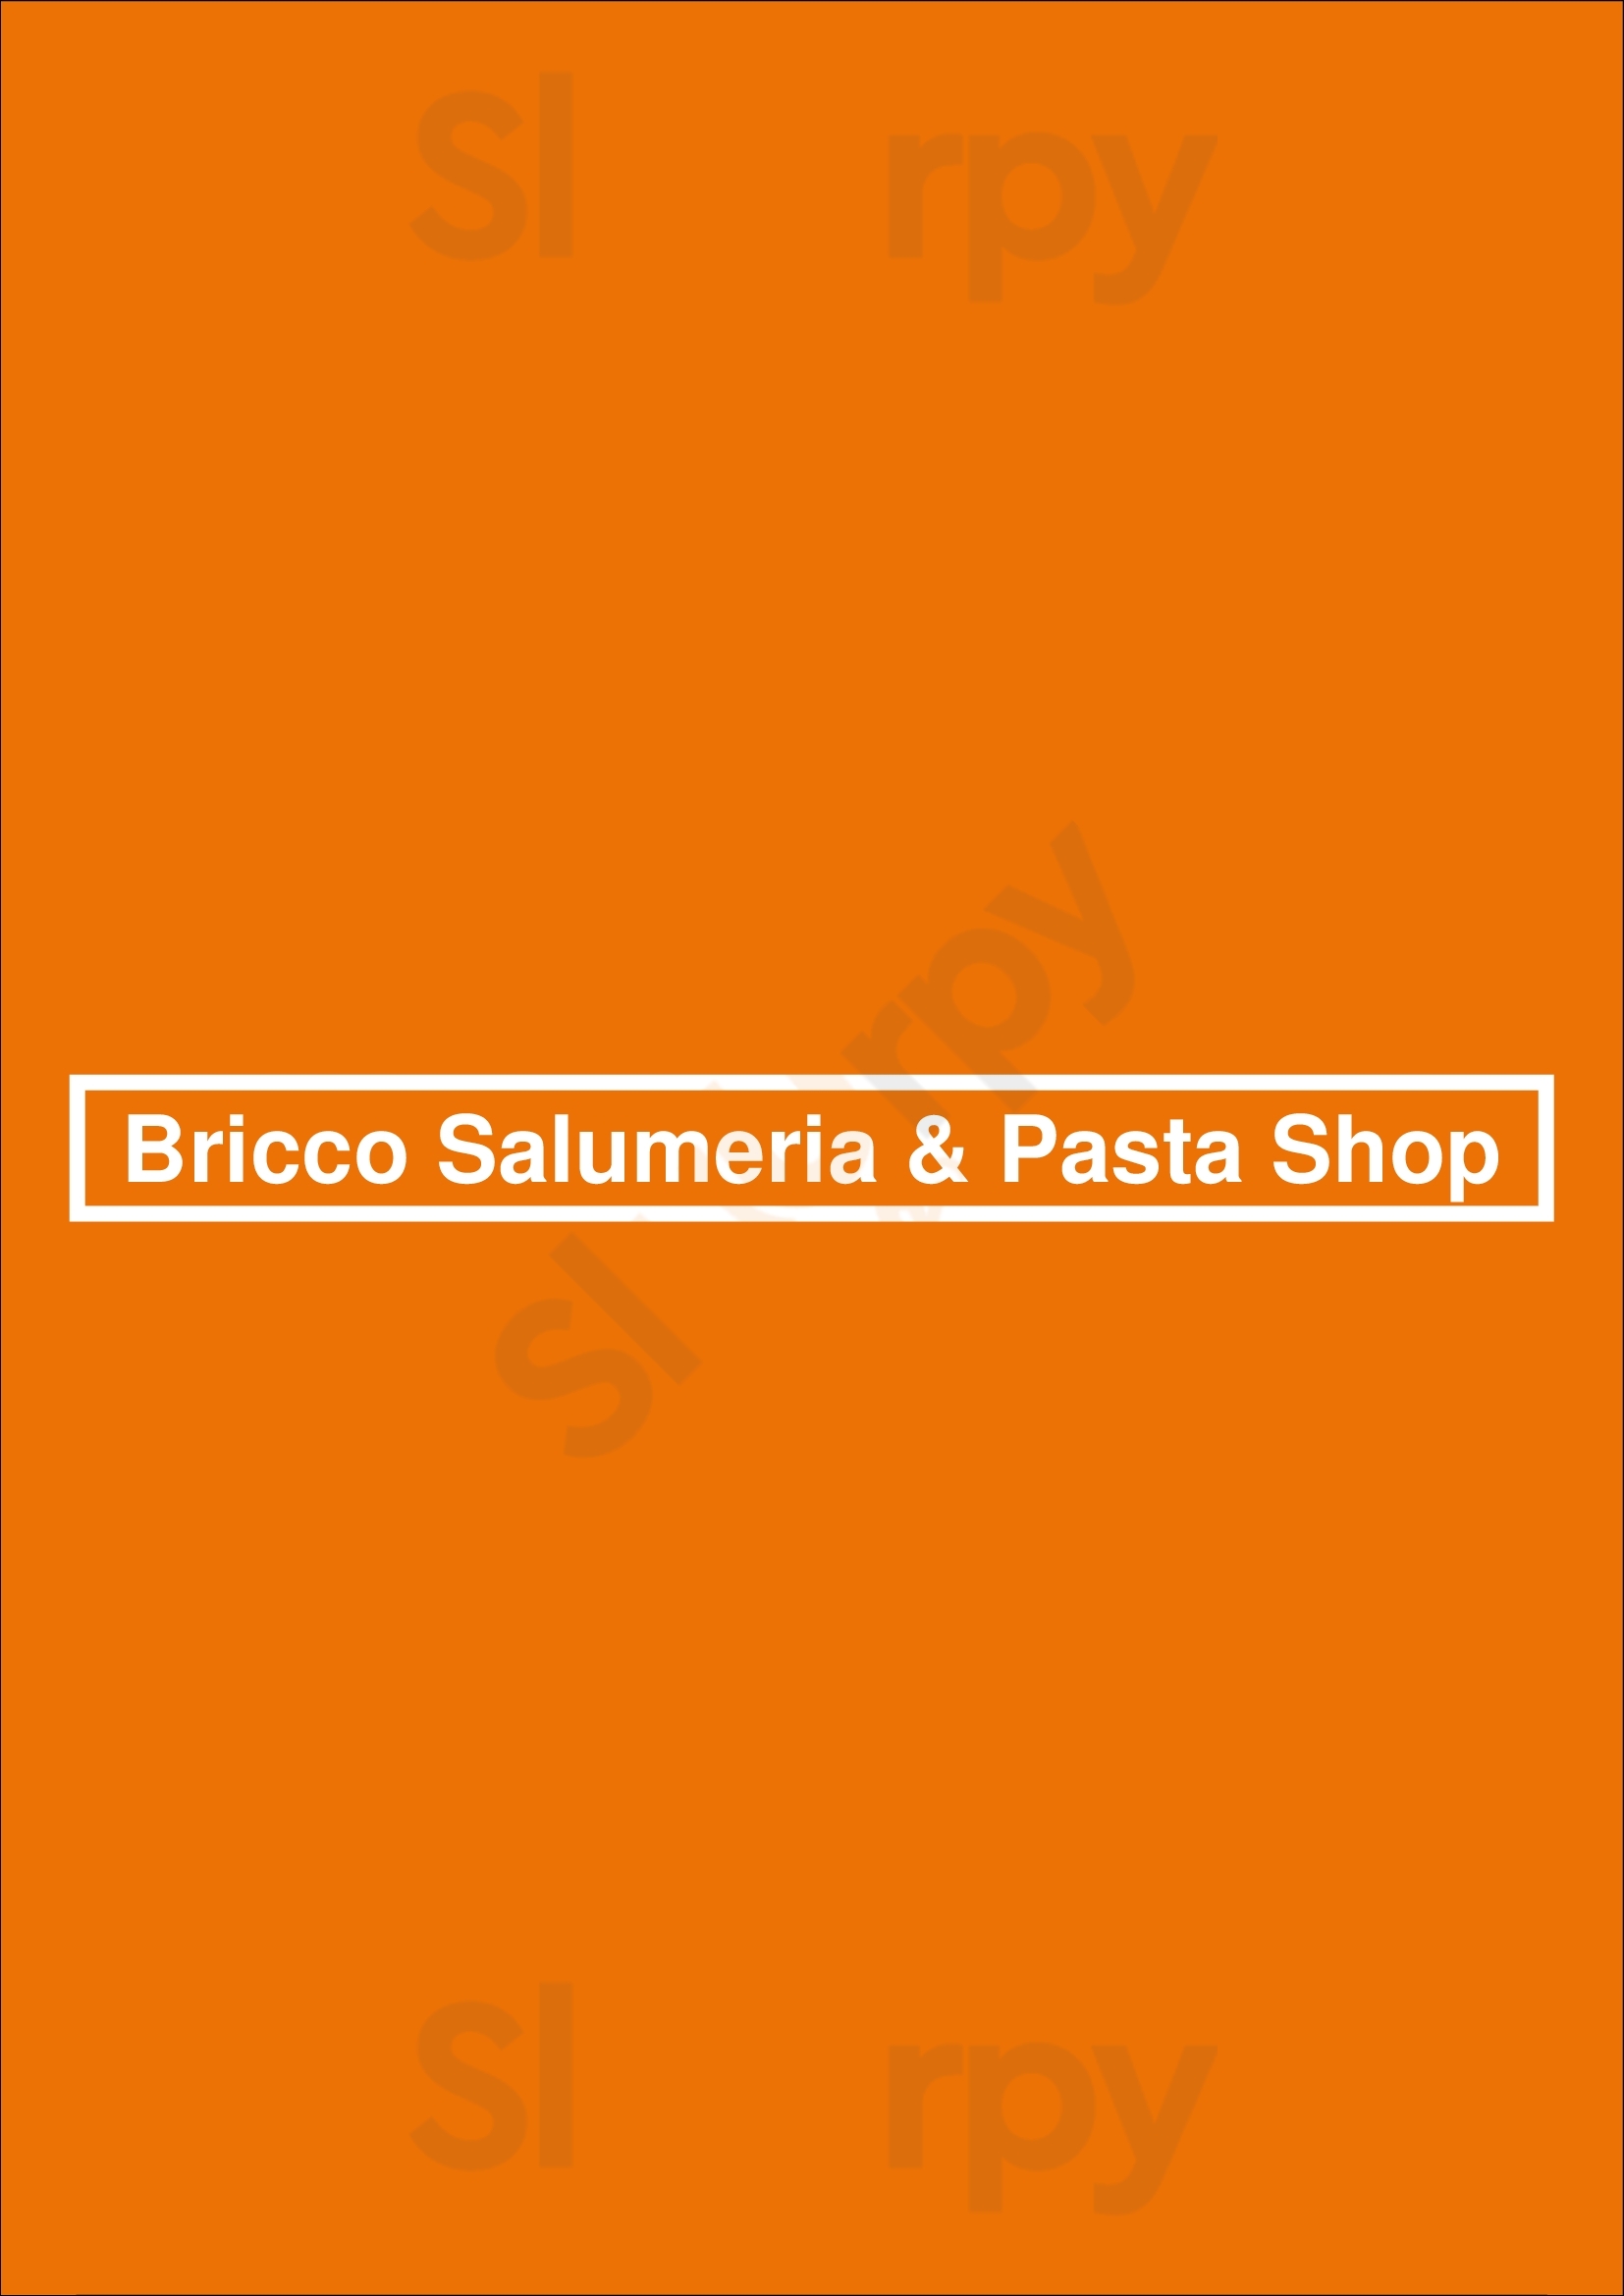 Bricco Salumeria & Pasta Shop Boston Menu - 1